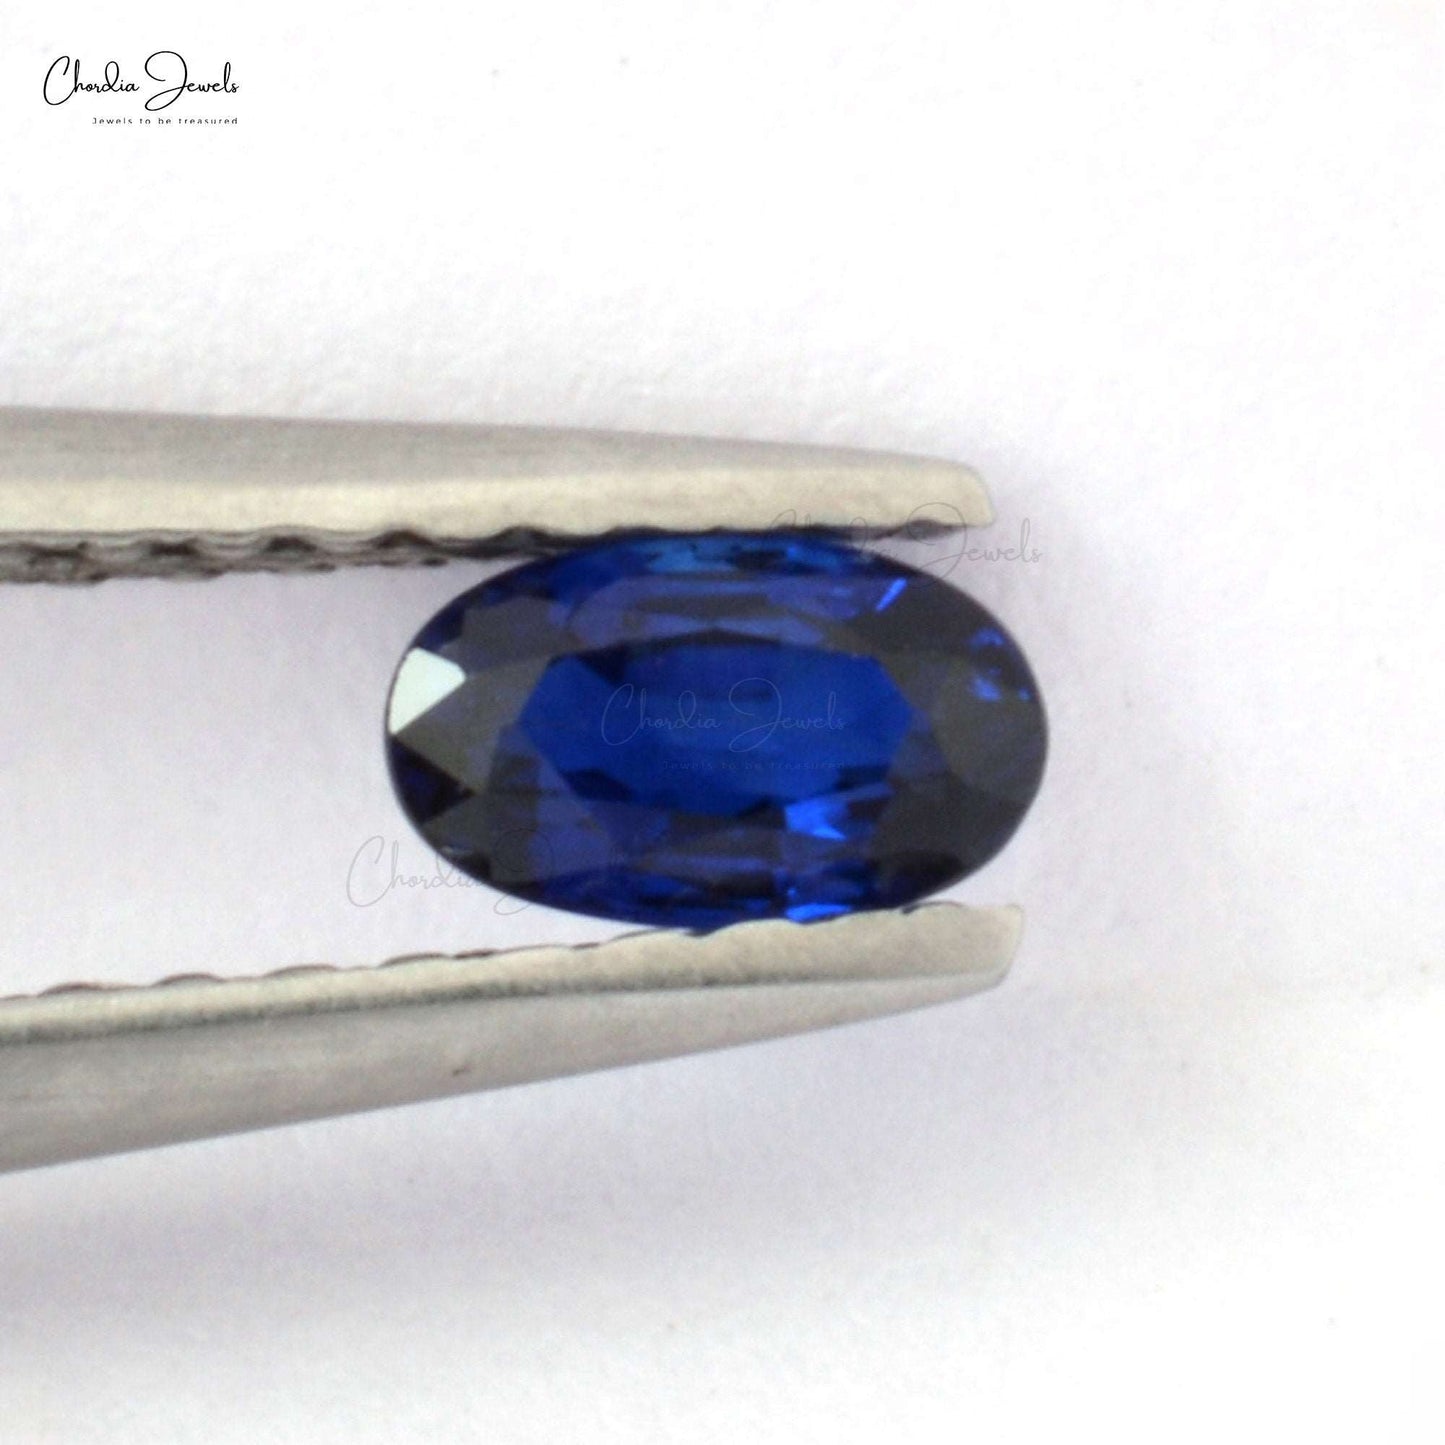 1/2 Carat Oval Cut High Quality Natural Blue Sapphire Gemstones